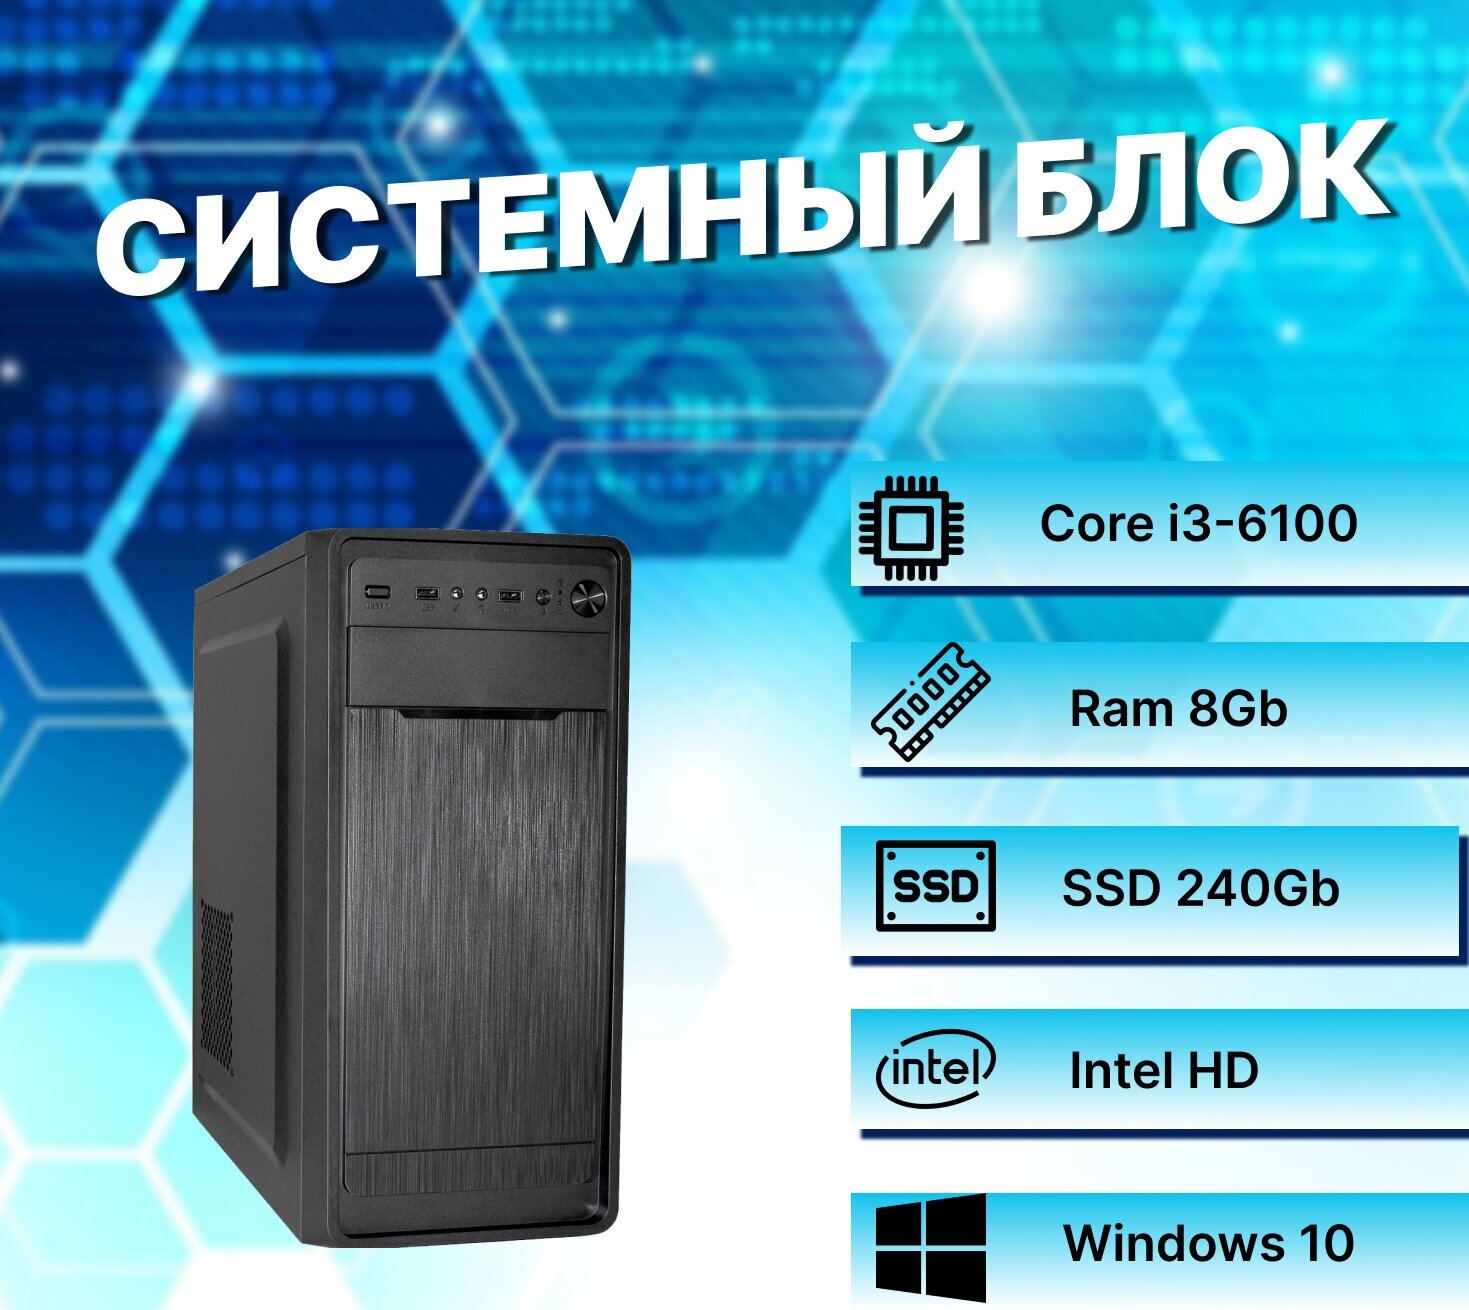 Системный блок Intel Core I3-6100 (3.7ГГц)/ RAM 8Gb/ SSD 240Gb/ Intel HD/ Windows 10 Pro